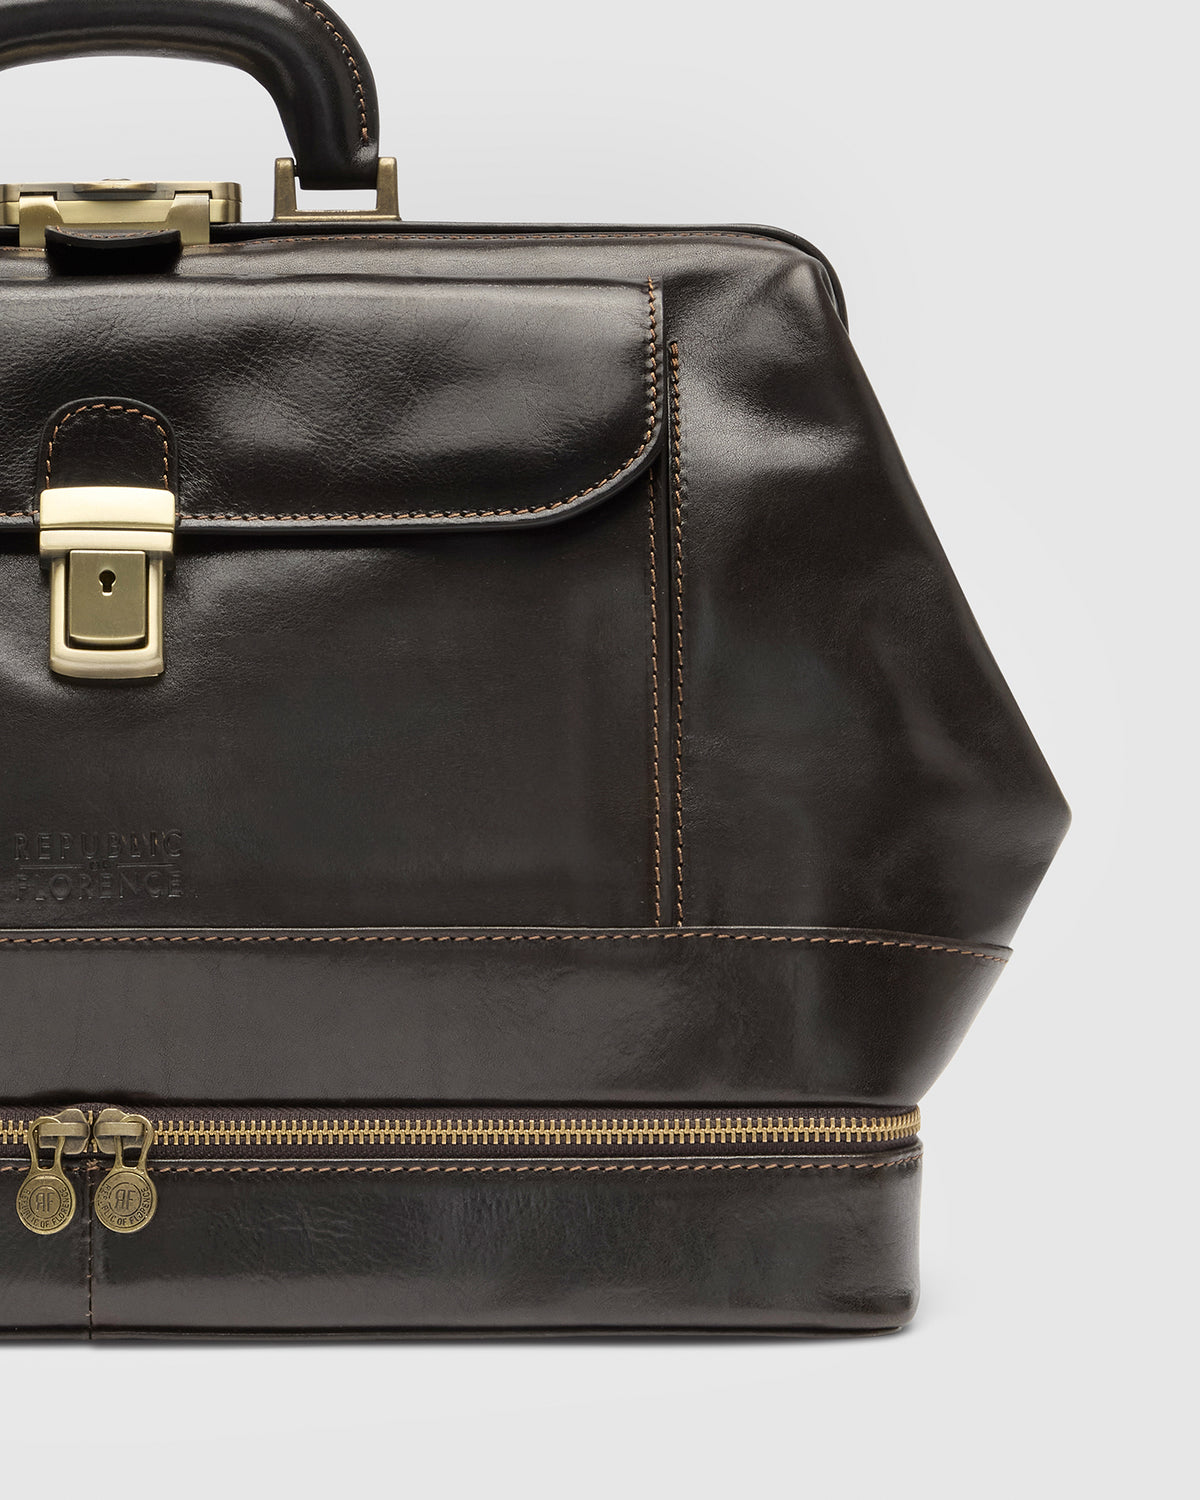 Tuscany Leather - Monalisa - Doctor gladstone leather bag with front straps  Black - TL10034/2: Handbags: Amazon.com